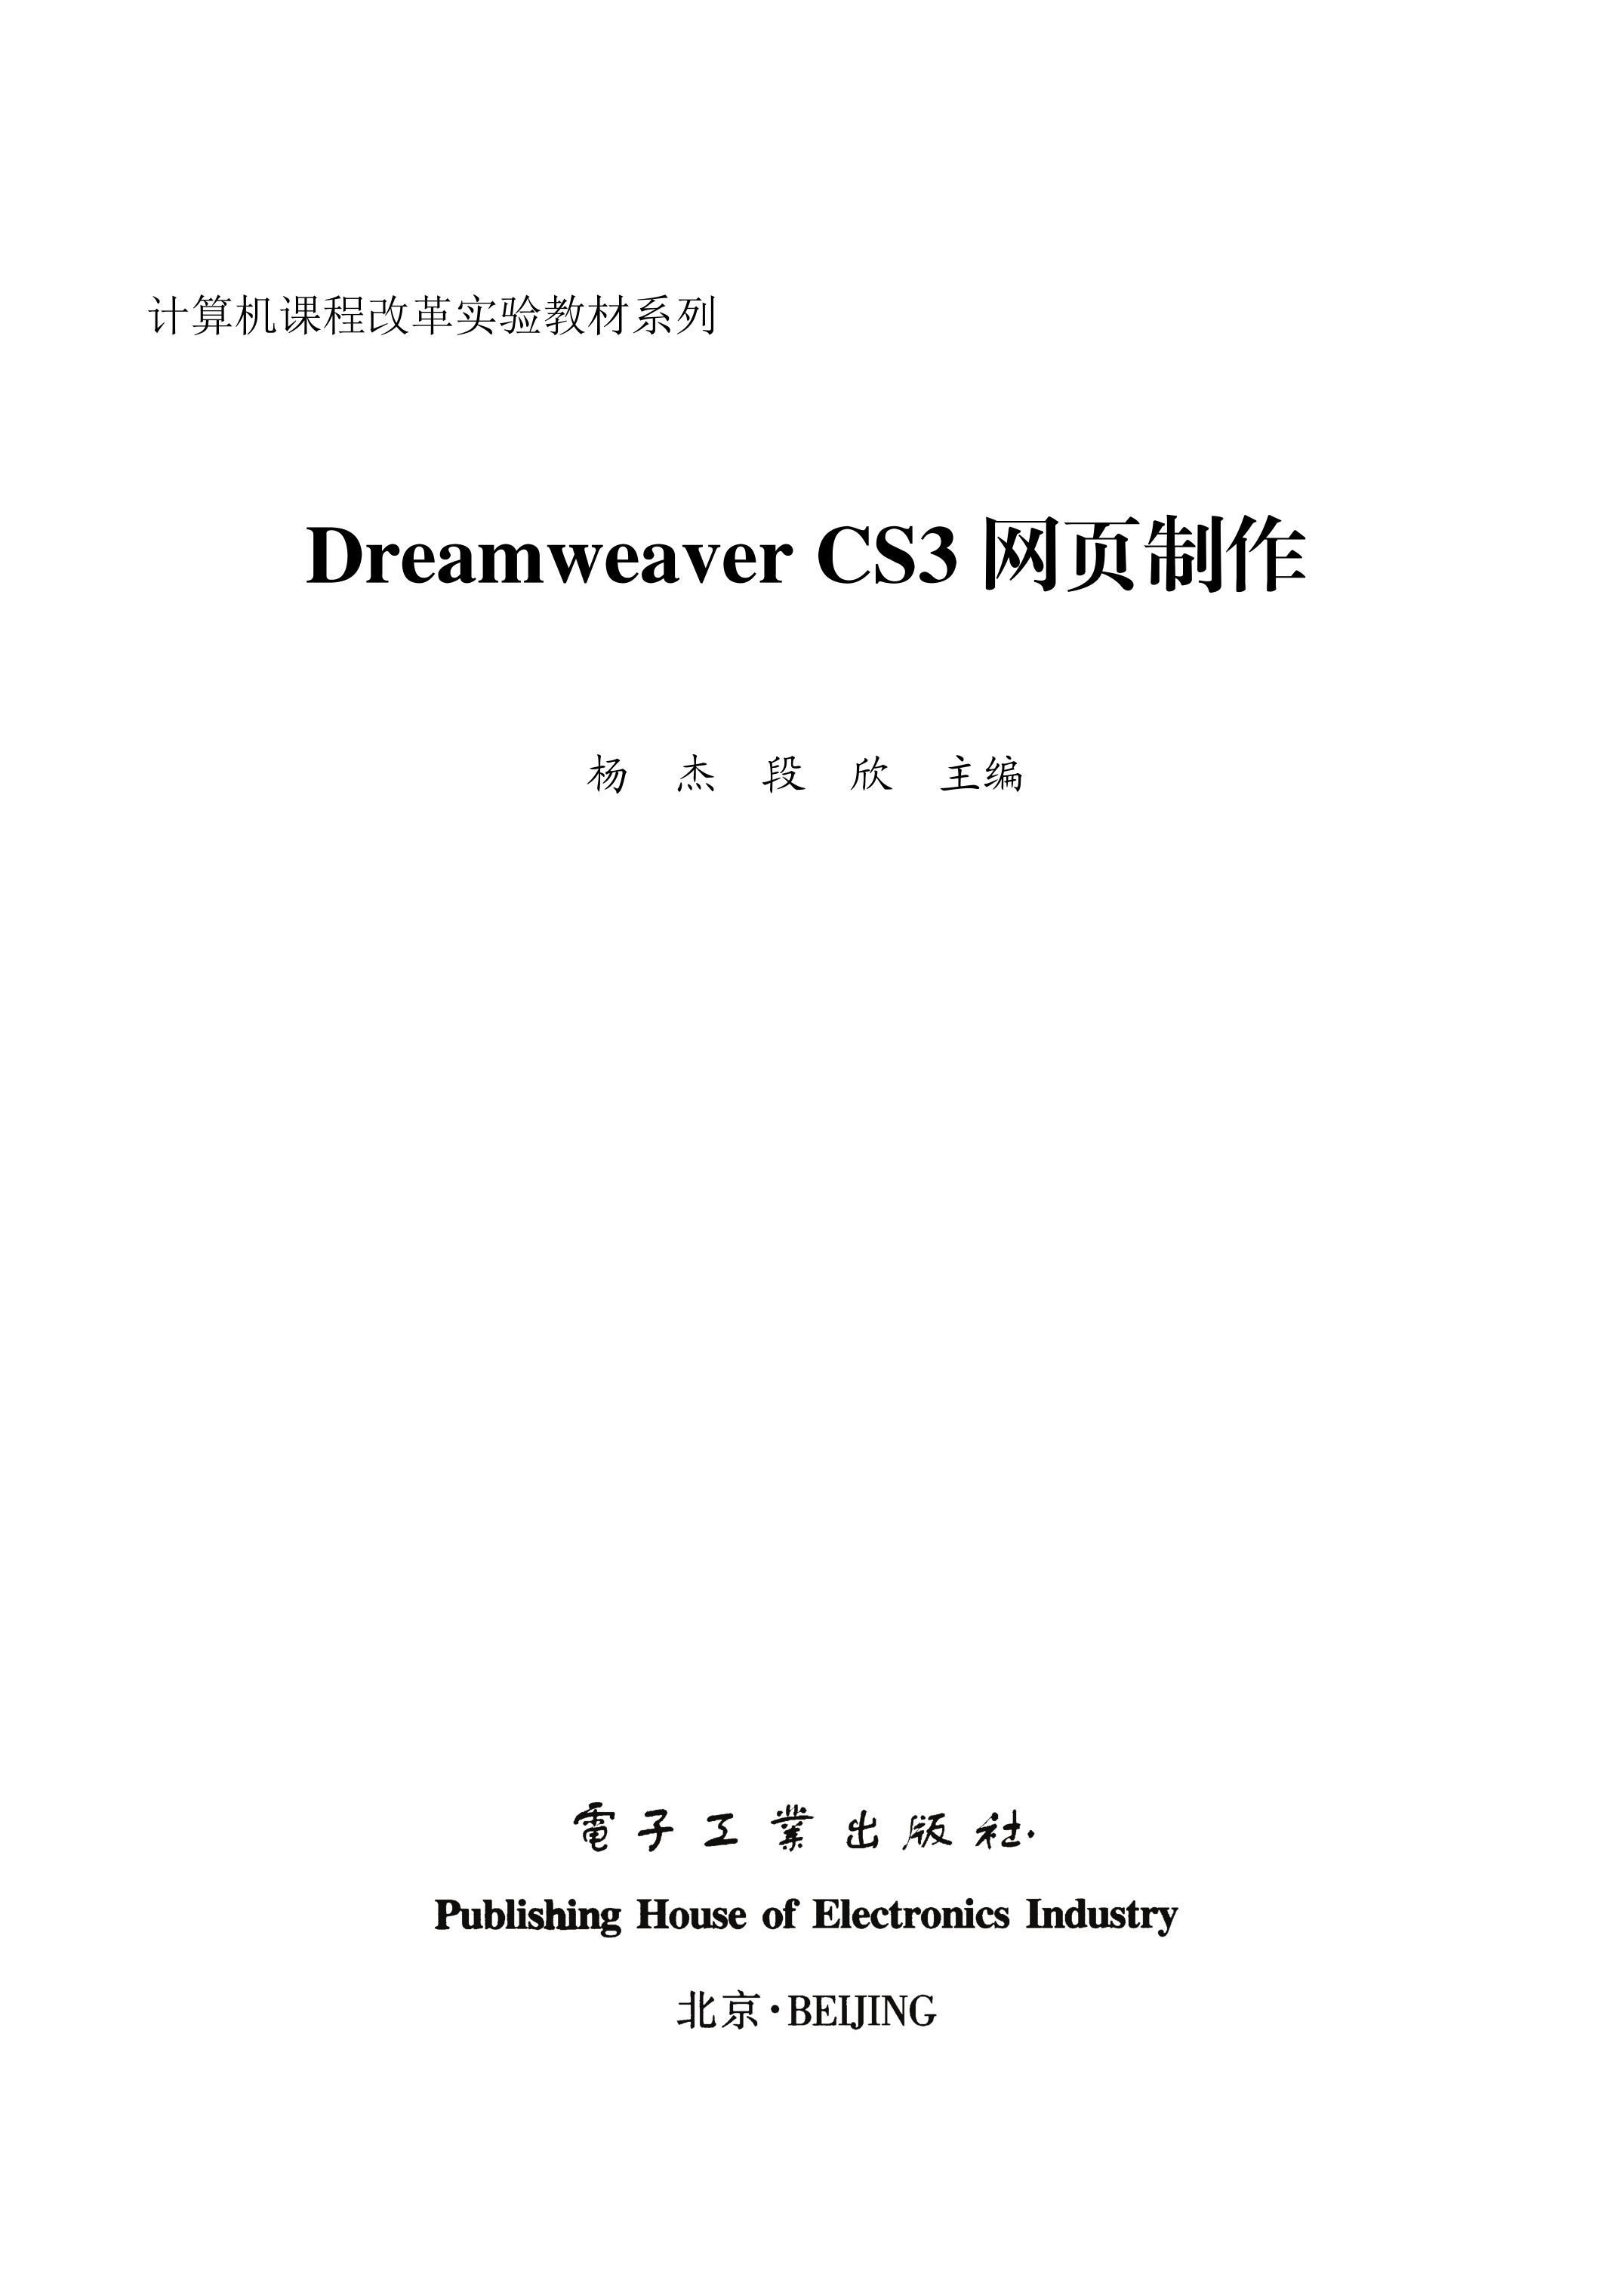 Dreamweaver CS3网页制作